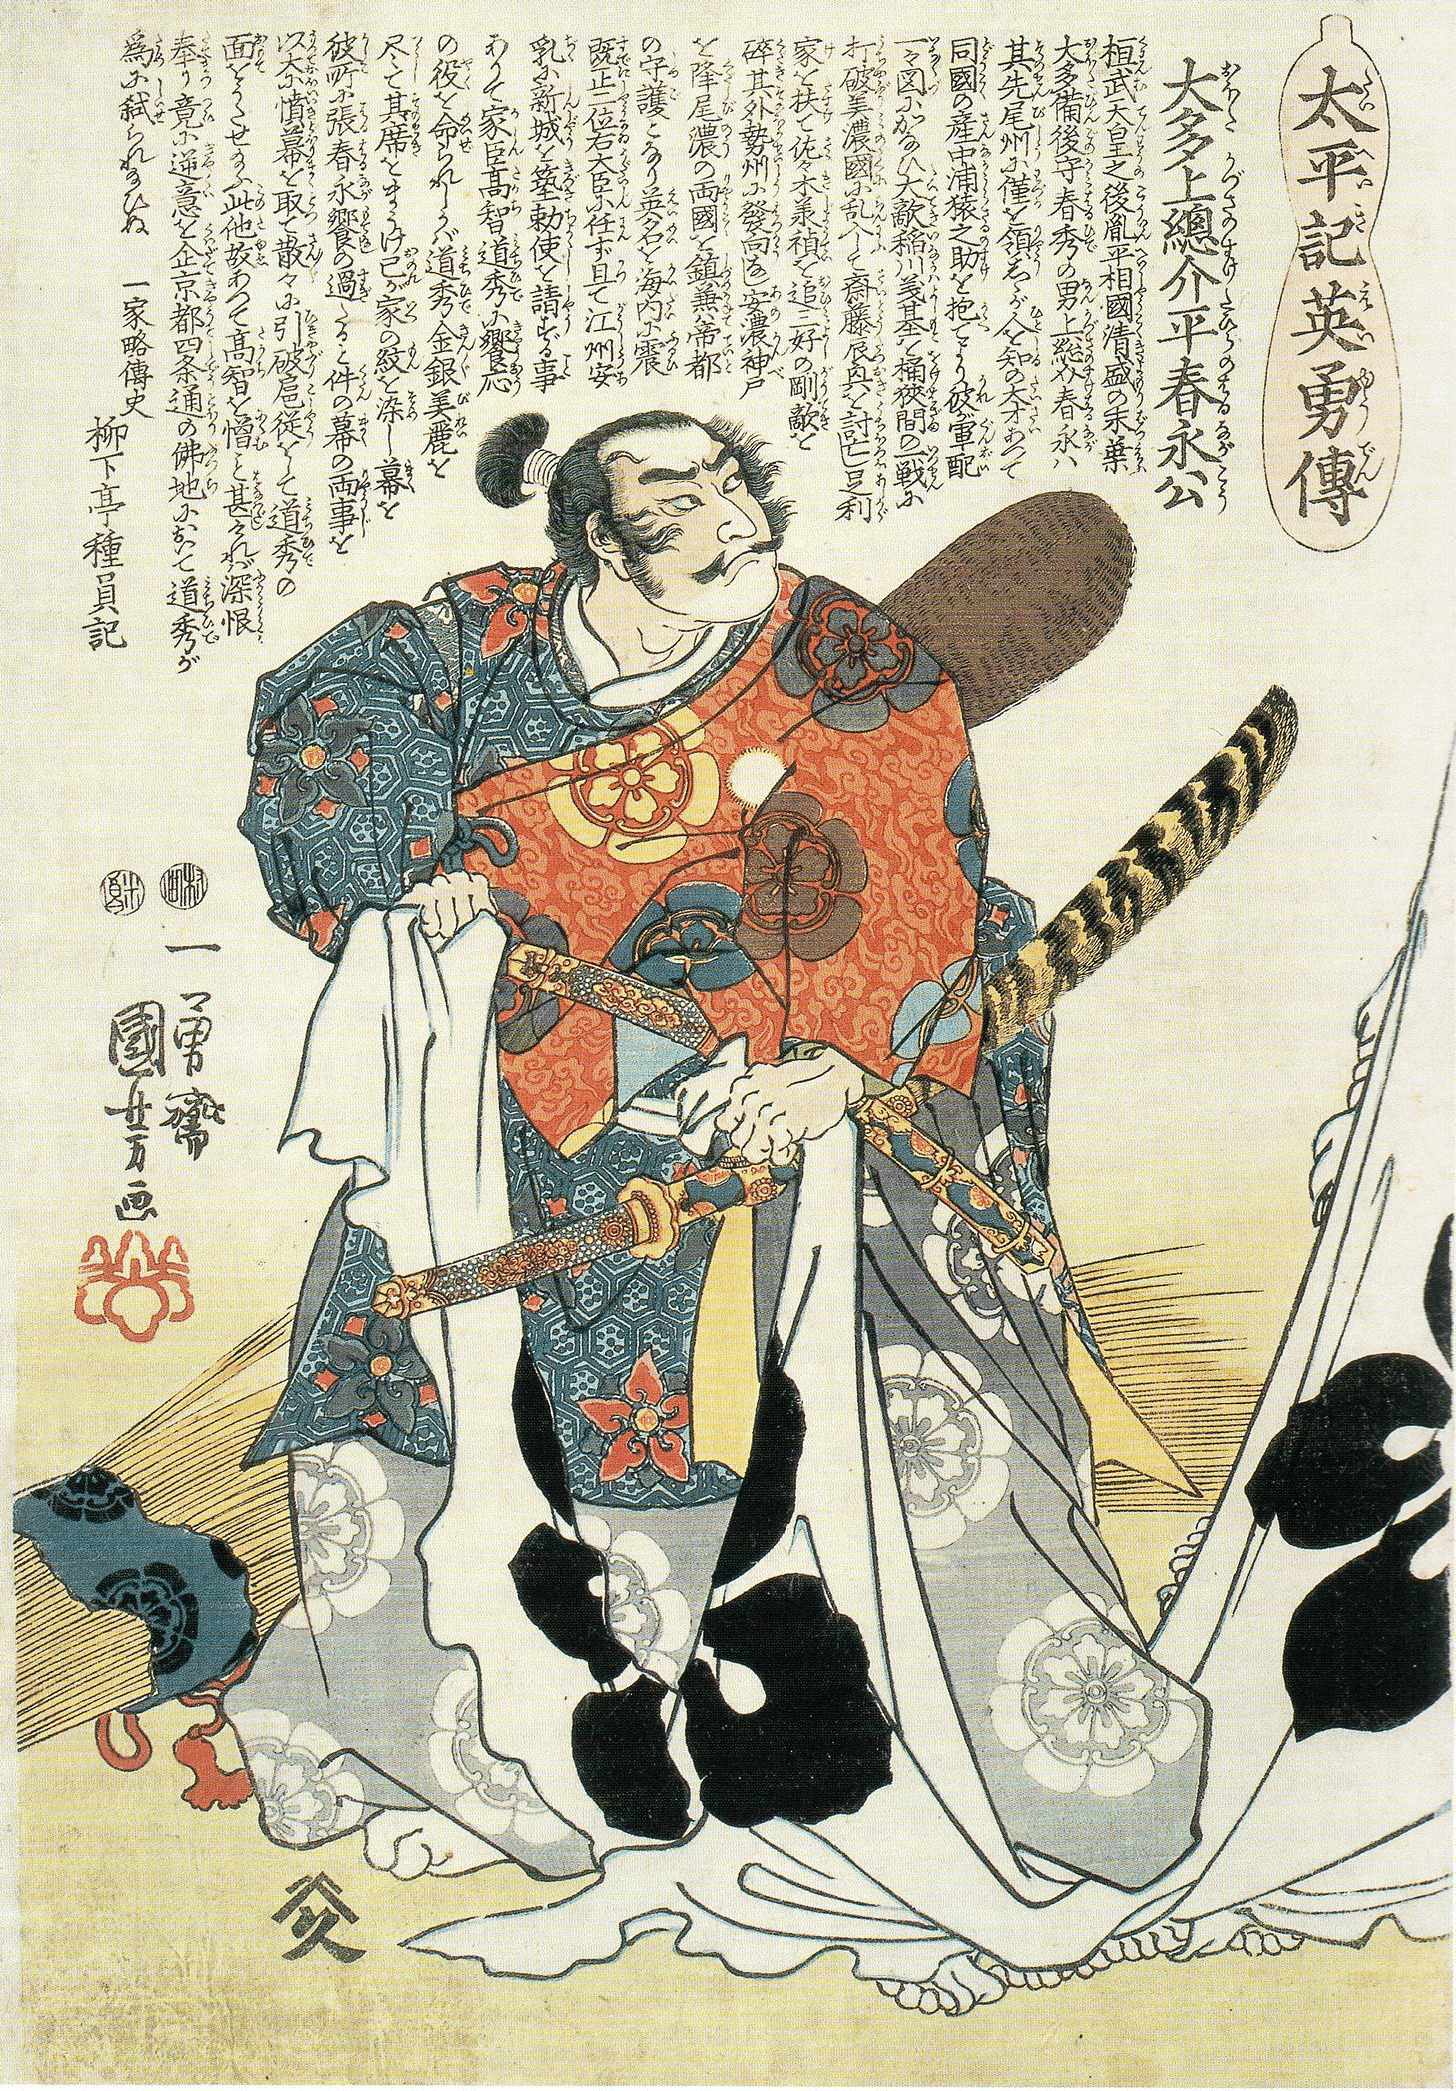 Oda Nobunaga. Courtesy Wikimedia Commons.